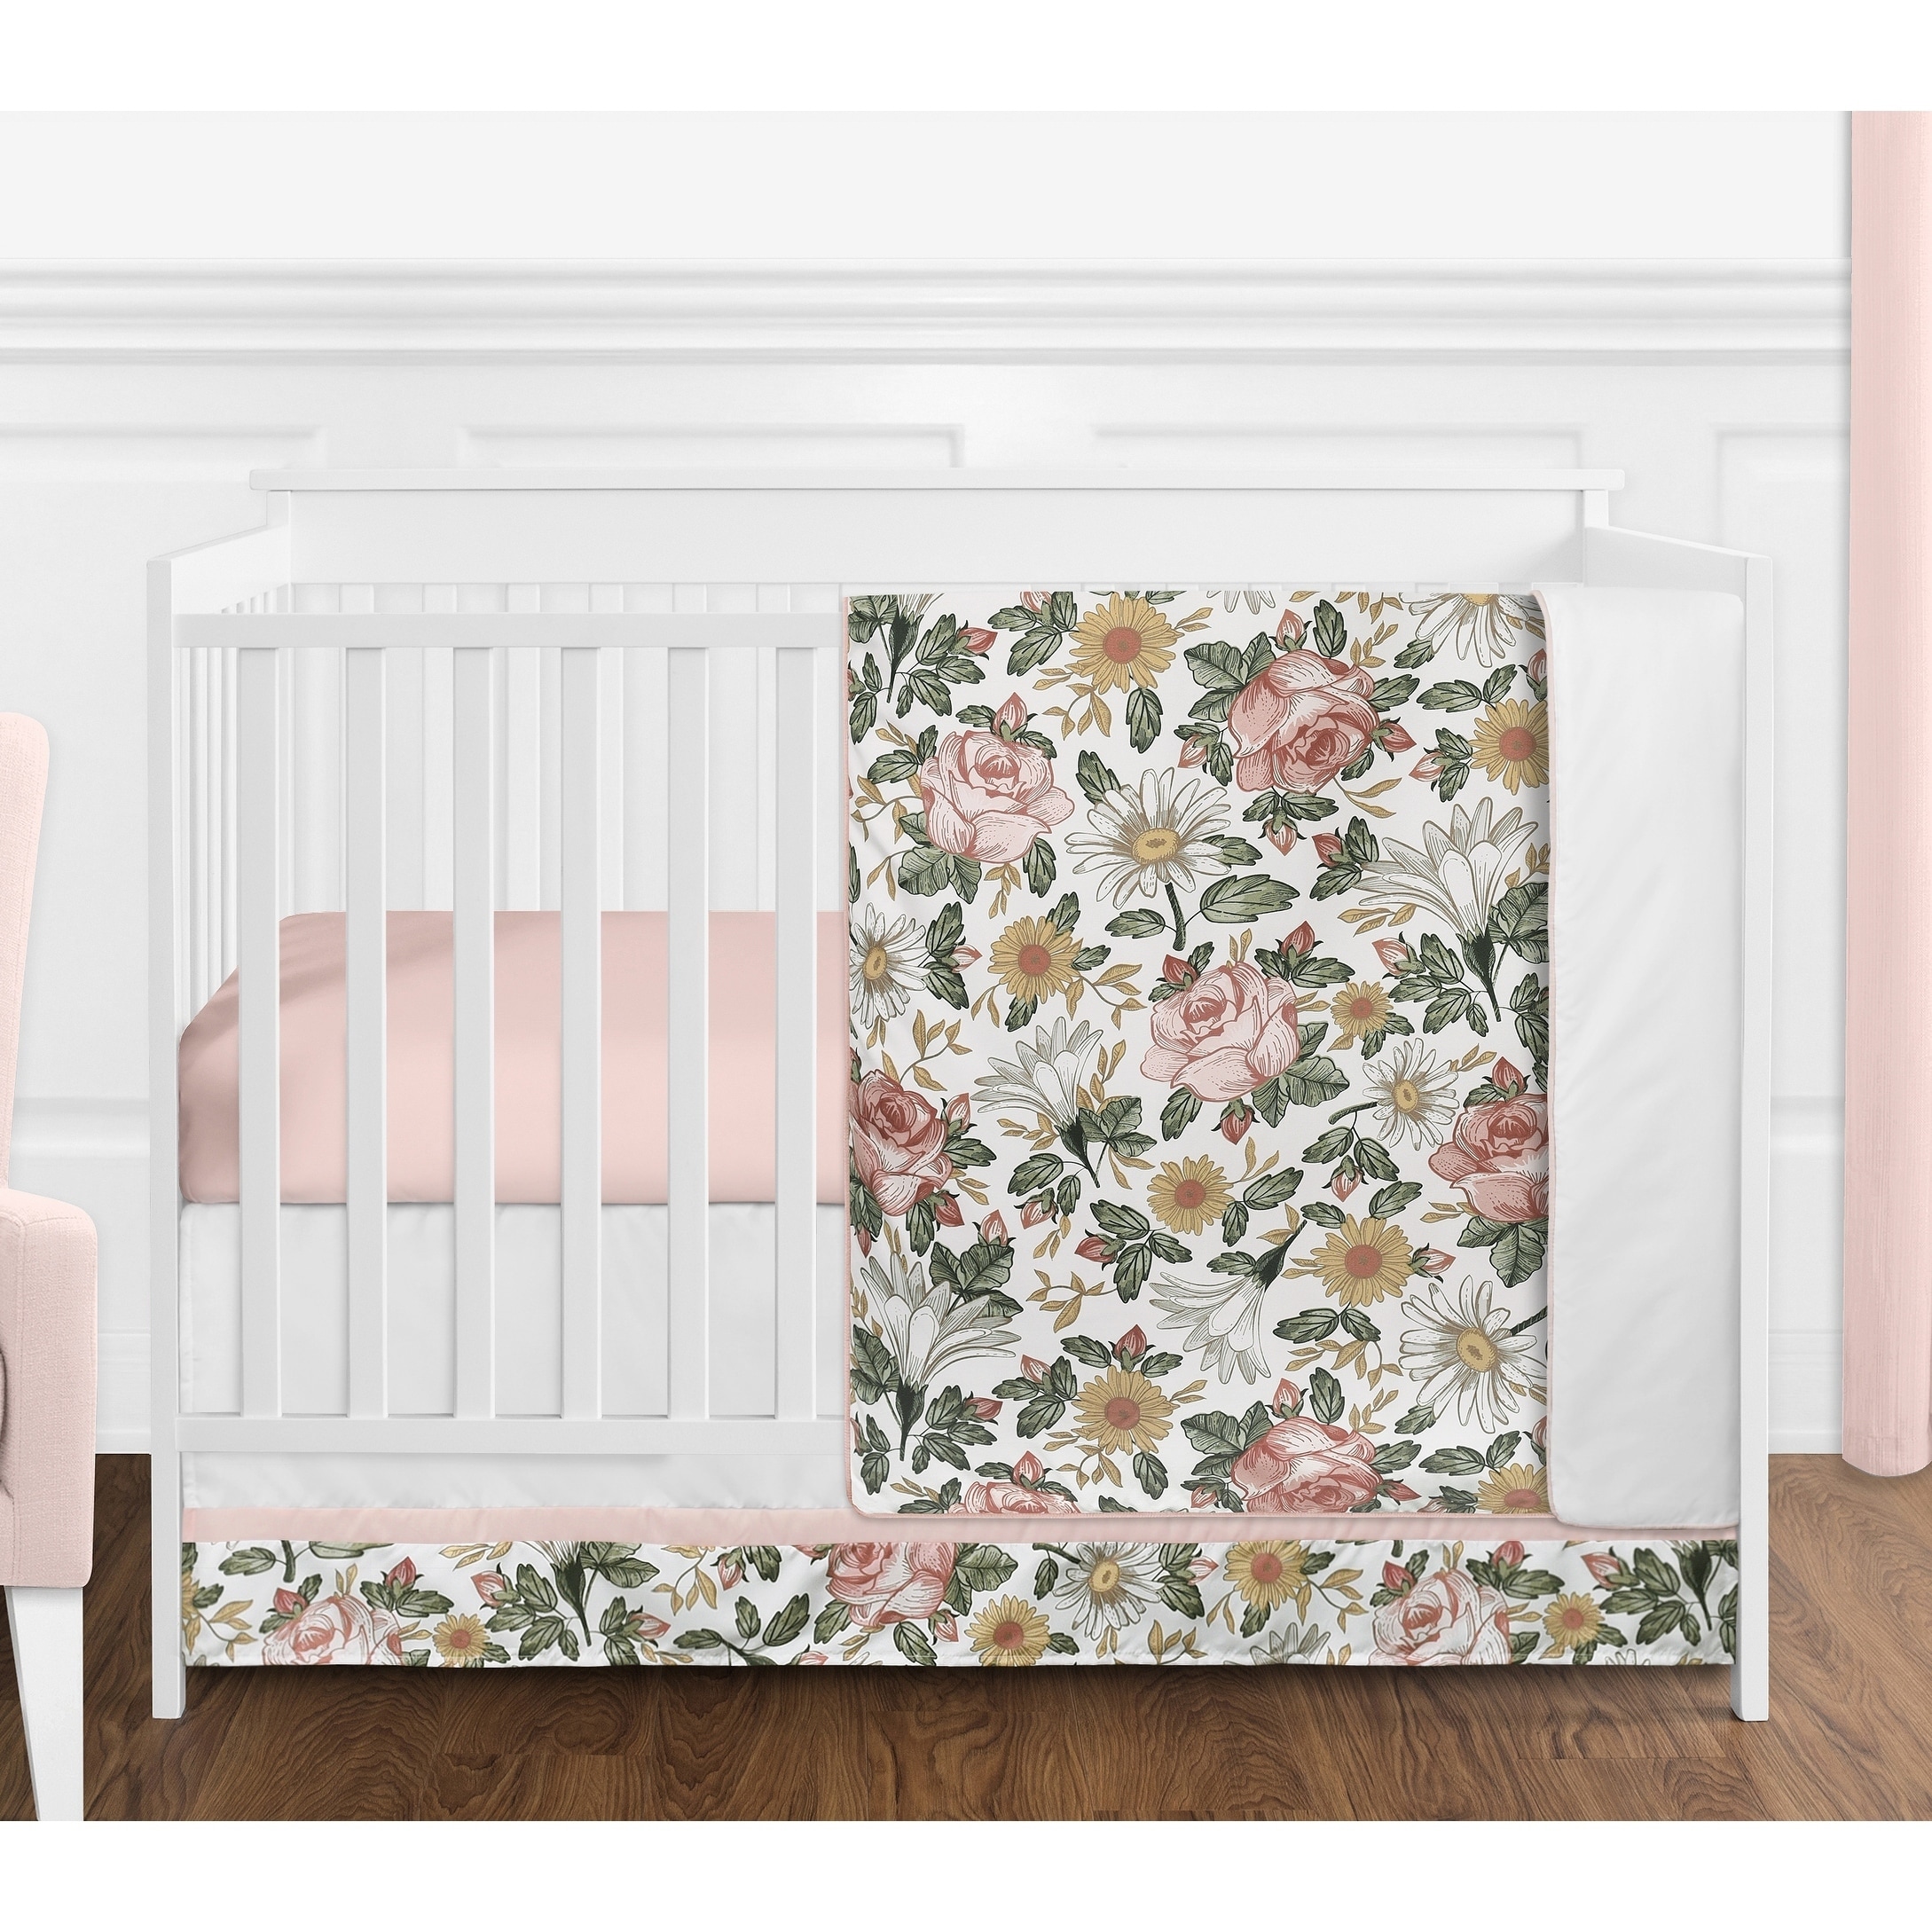 sweet jojo floral crib bedding